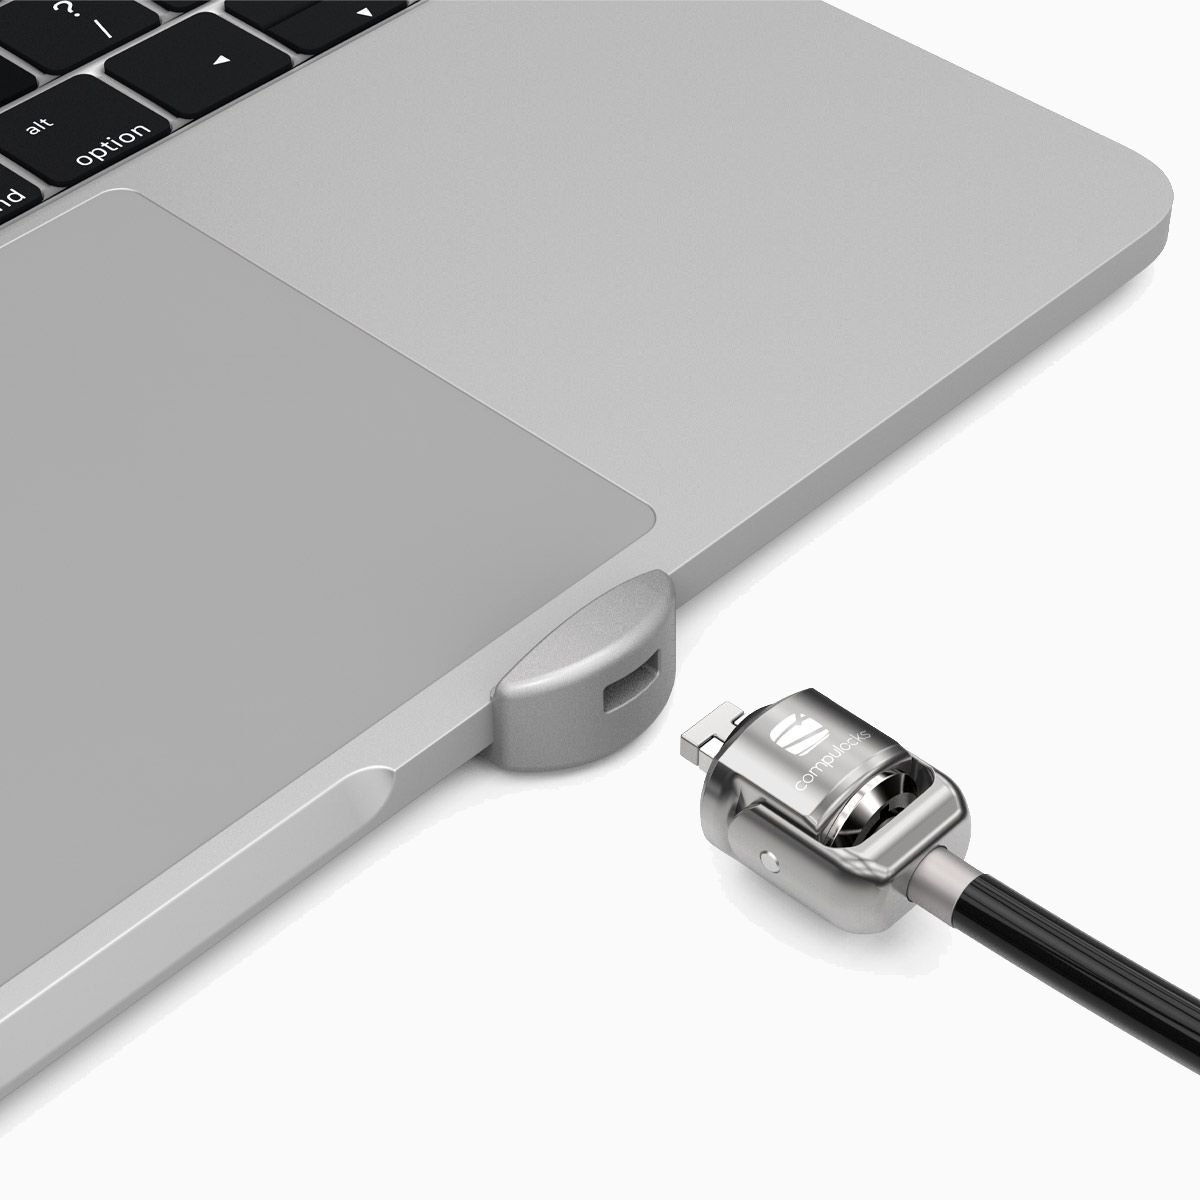 Maclocks MacBook Pro 13 Front Lock – The Ledge